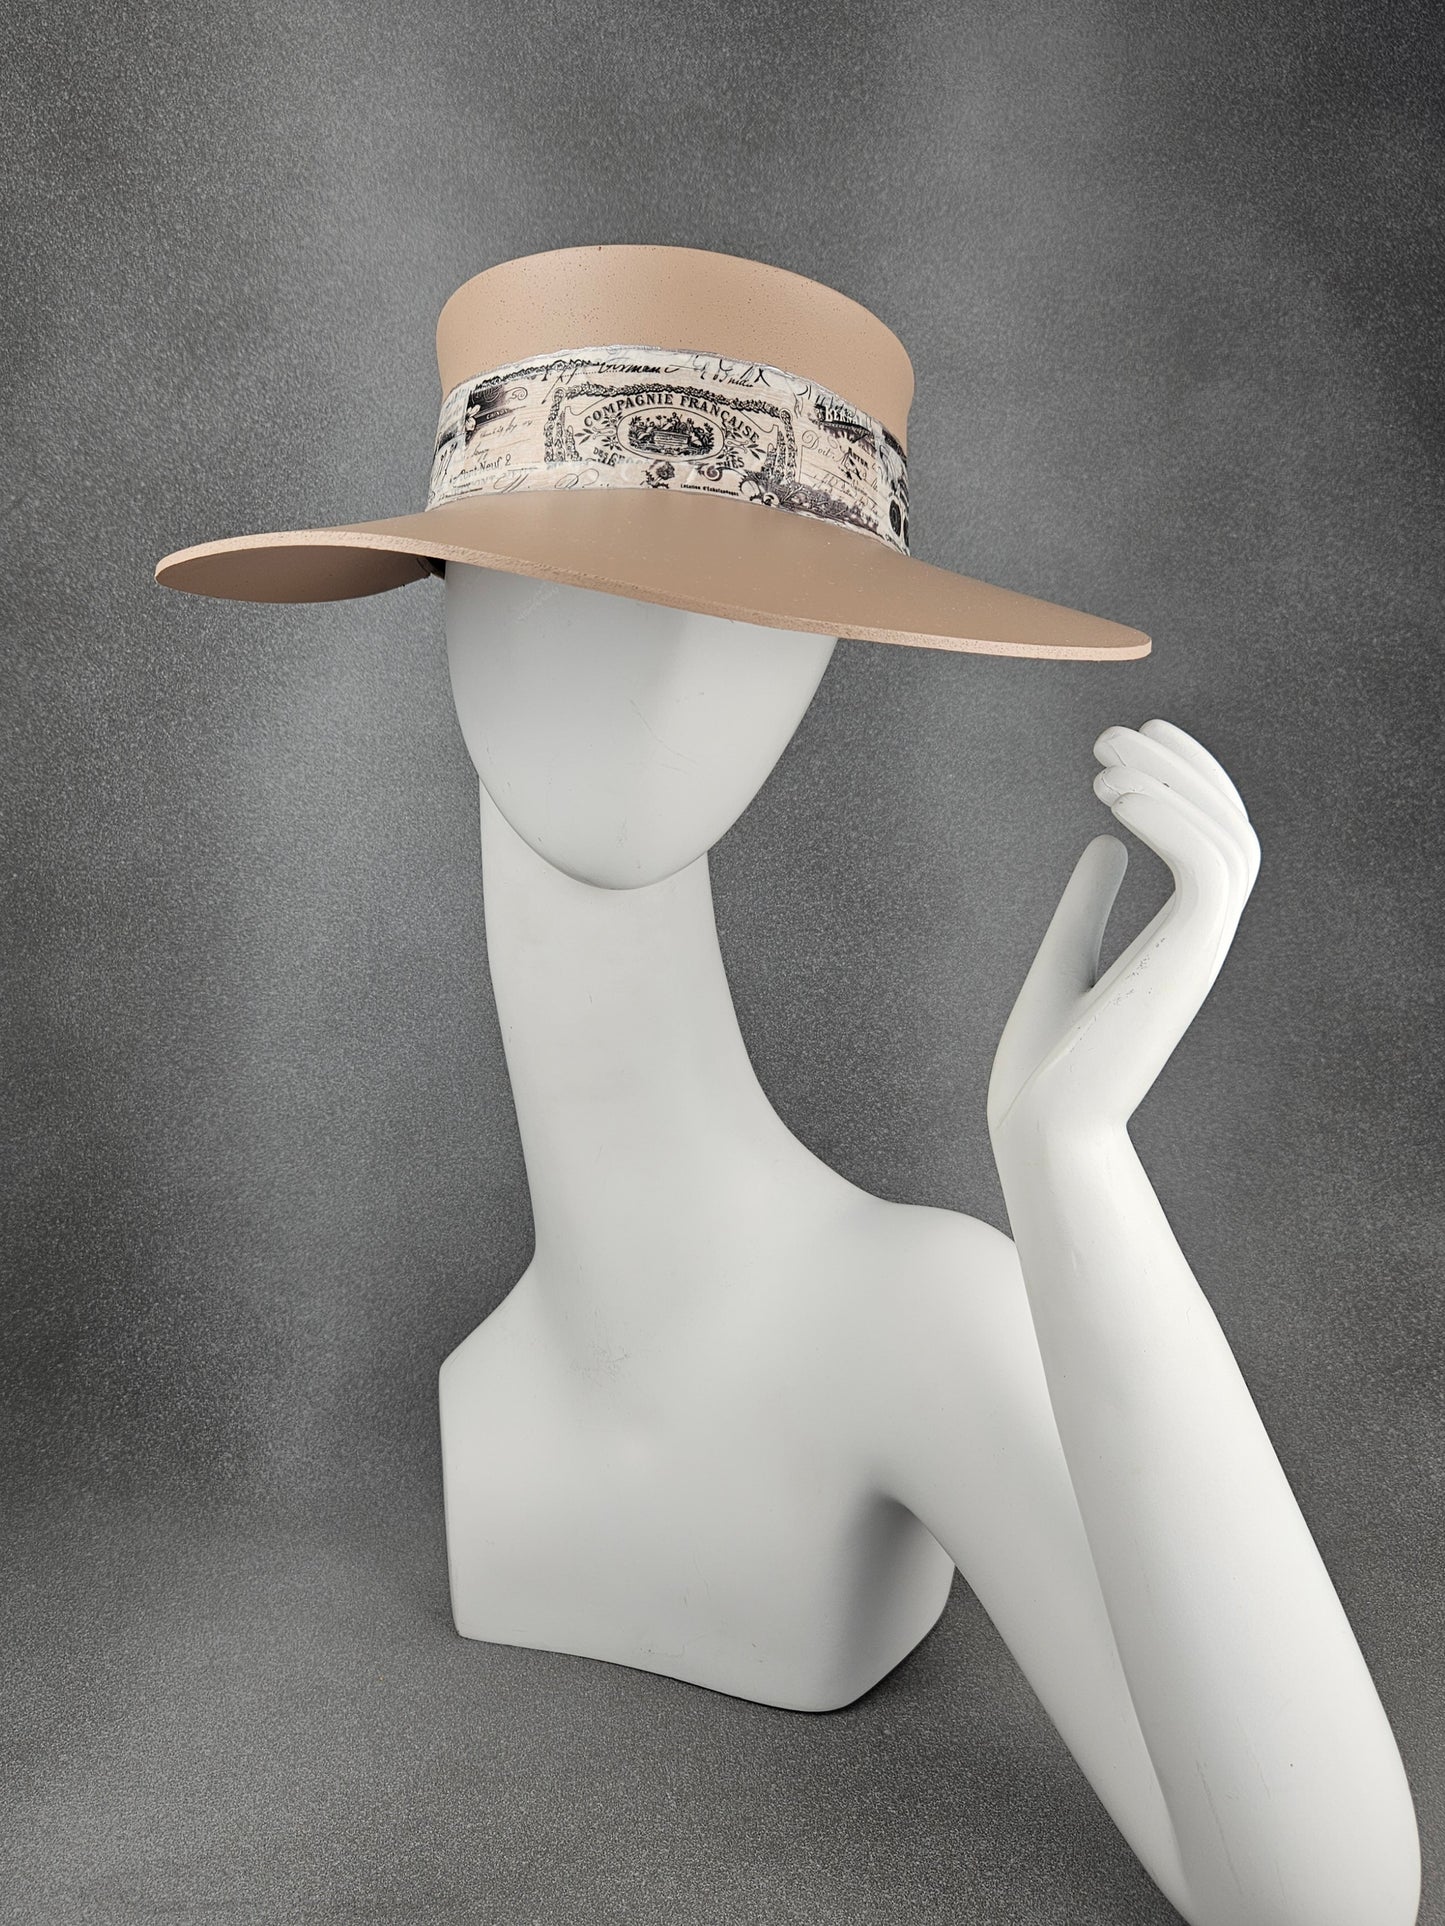 Tall Peachy Beige Audrey Sun Visor Hat with French Themed Band: UV Resistant, Walks, Brunch, Tea, Golf, Wedding, Church, No Headache, 1950s Pool, Beach, Big Brim